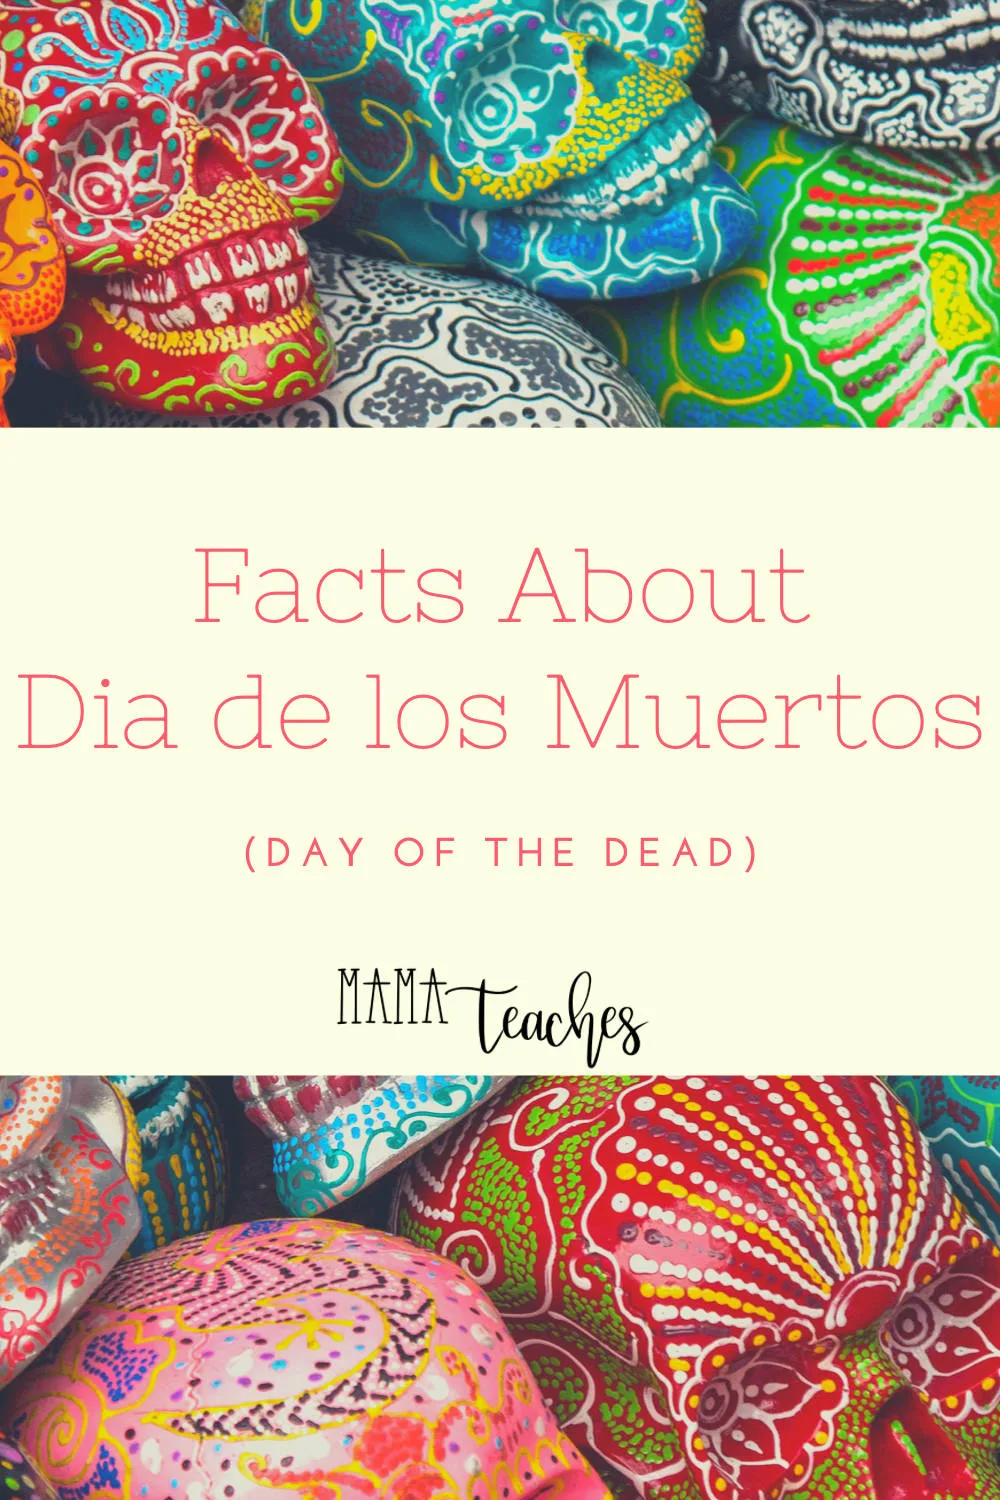 Facts About Day of the Dead - Dia de los Muertos